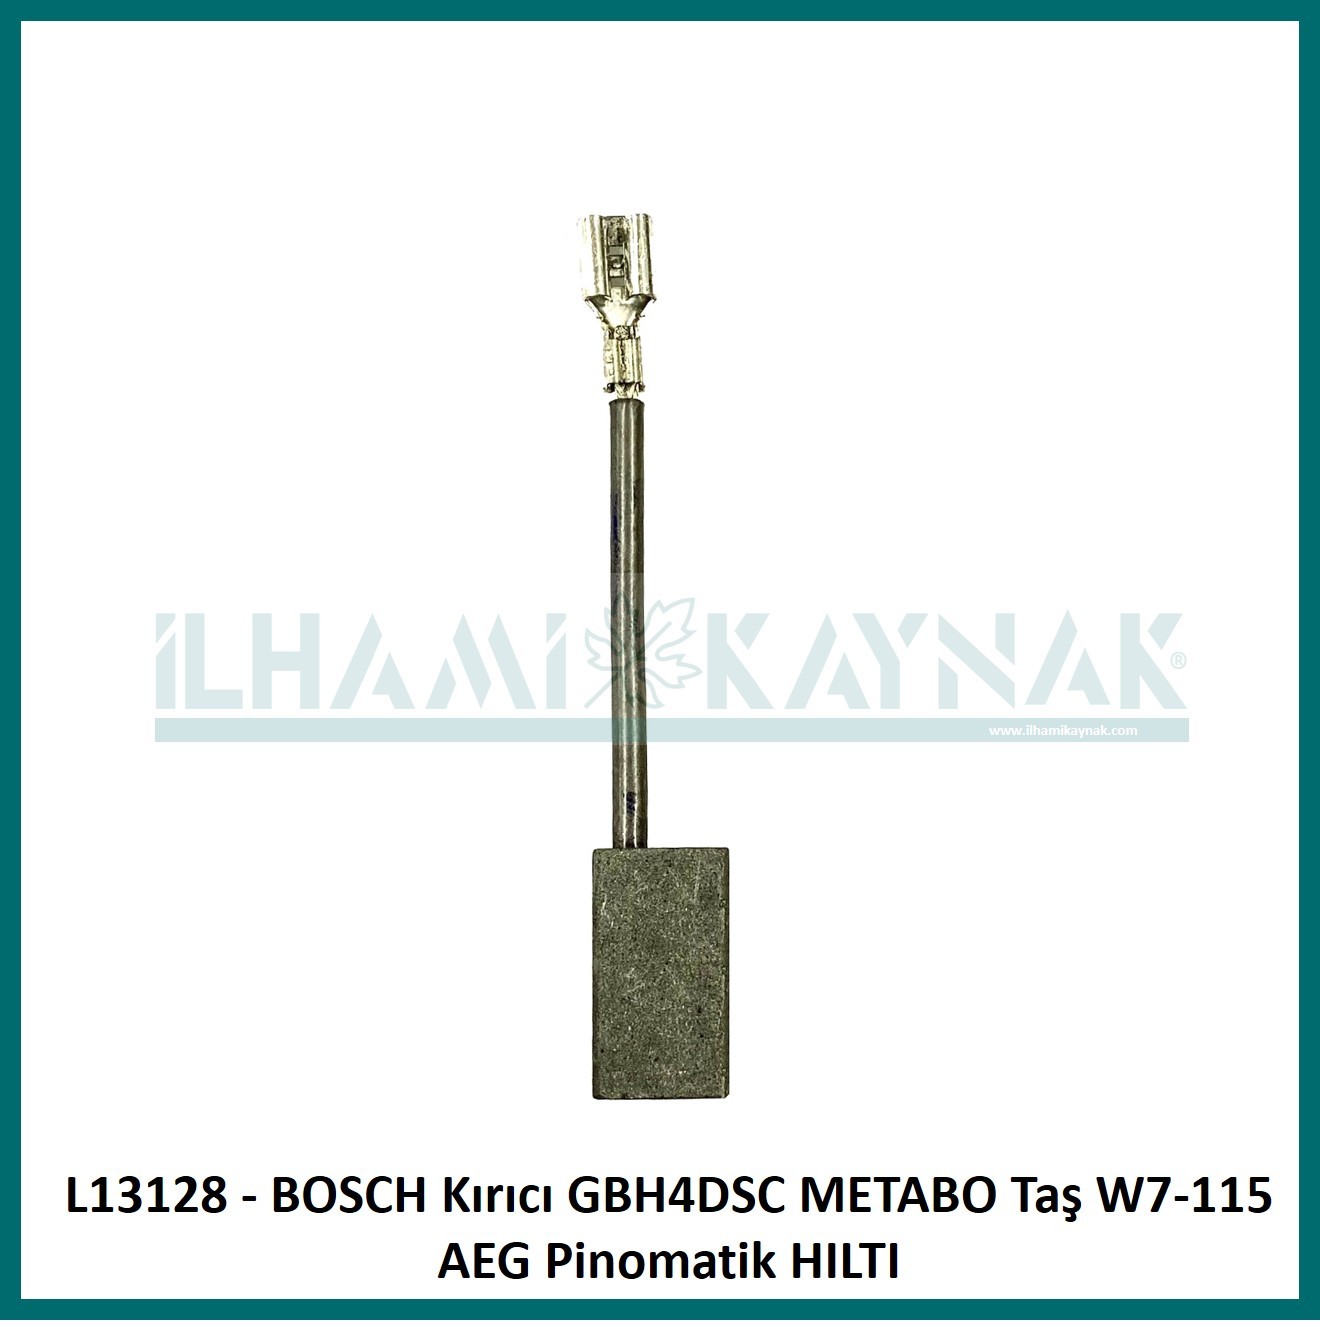 L13128 - BOSCH Kırıcı GBH4DSC METABO Taş W7-115 AEG Pinomatik HILTI - 5*10*17 mm - 100 Adet